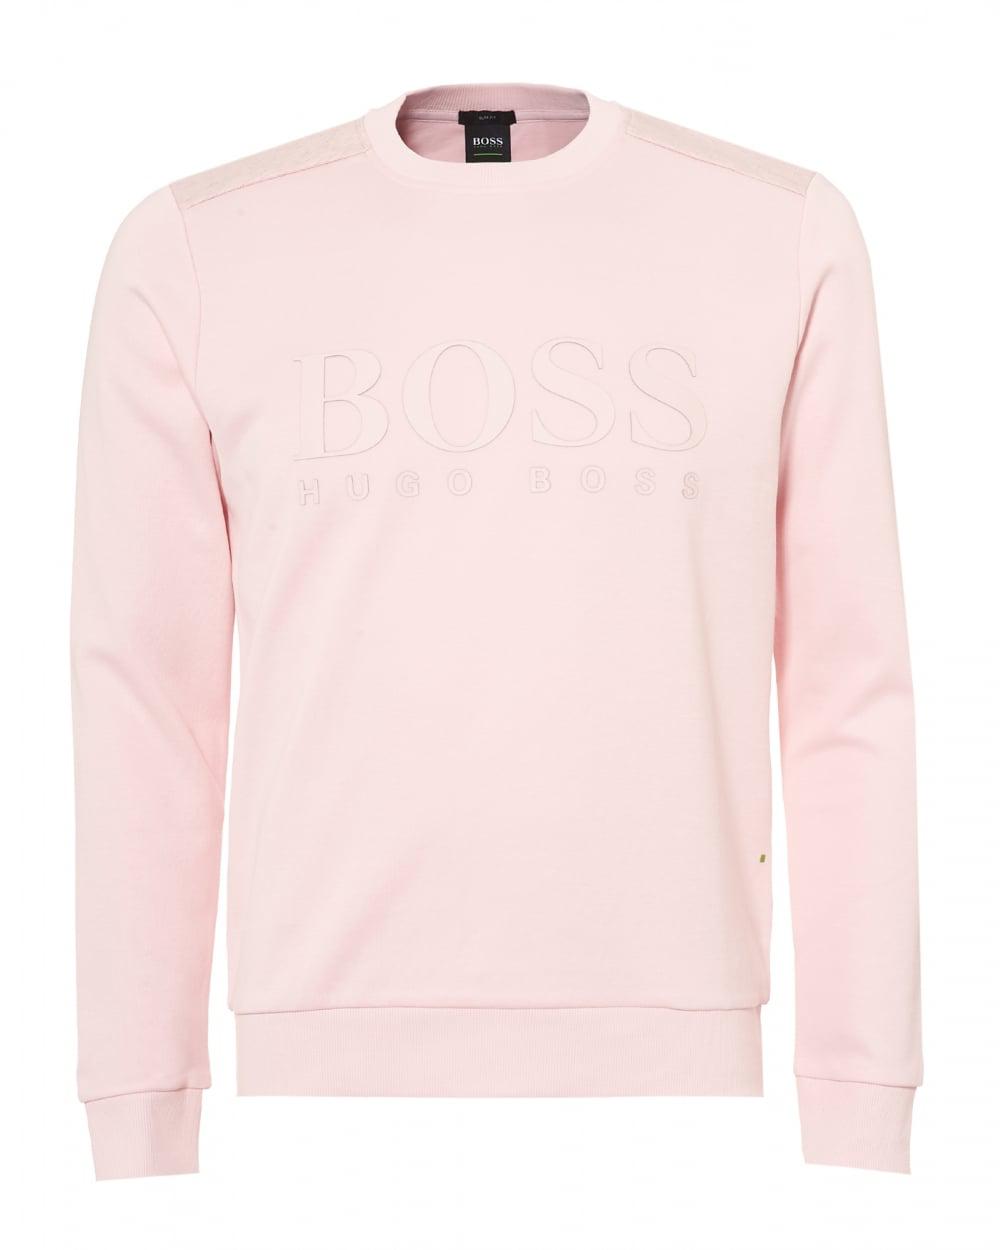 hugo boss pink sweater